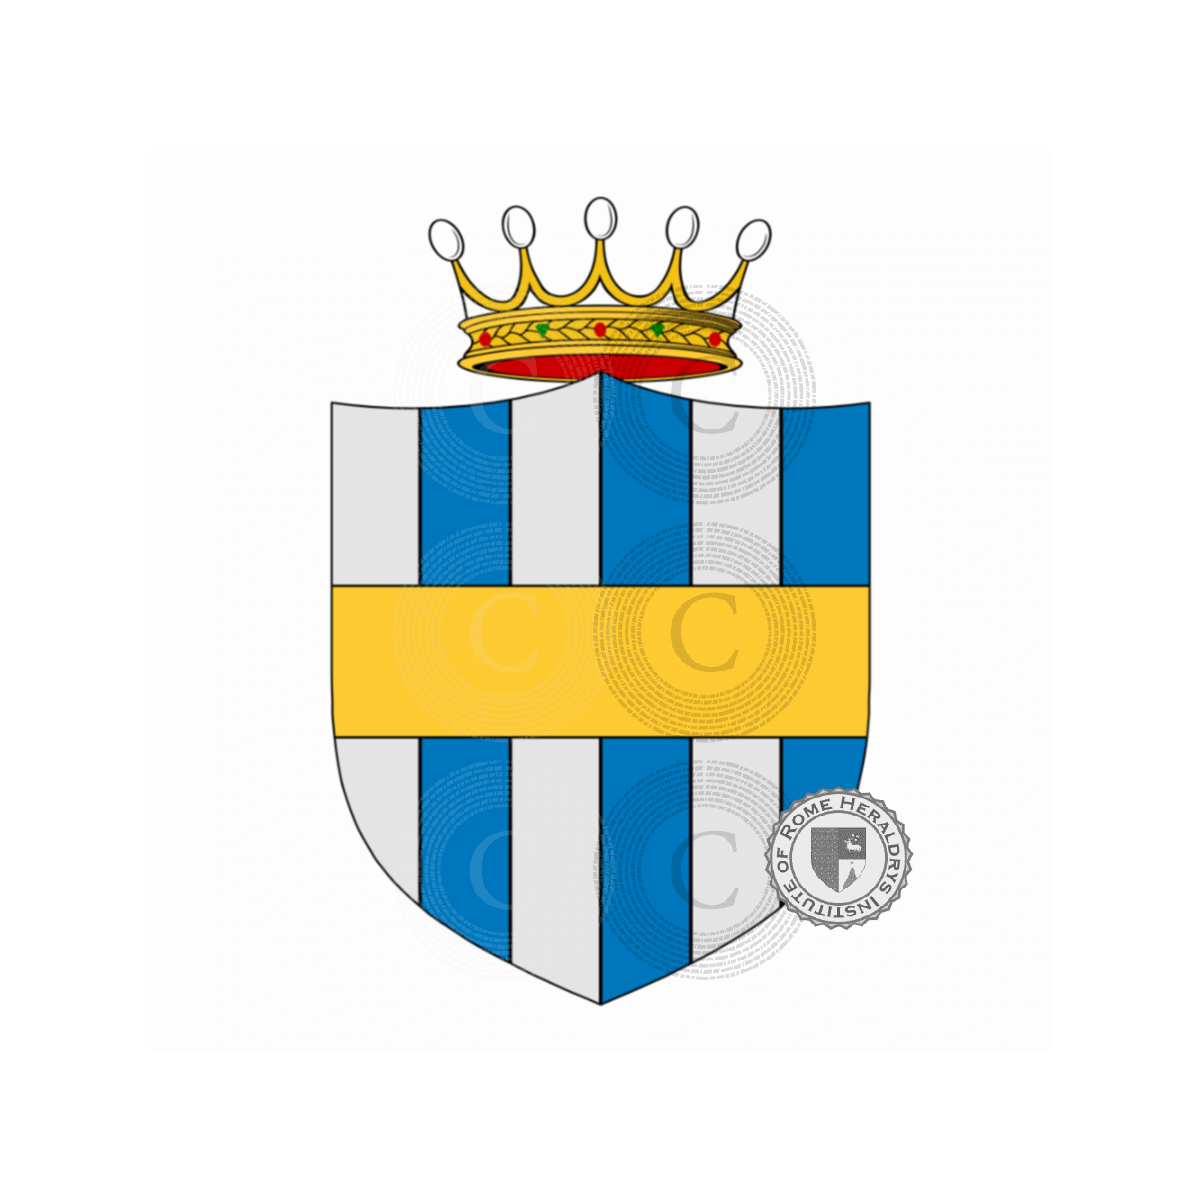 Wappen der FamilieFranzesi, della Foresta,Foresti,Franzese